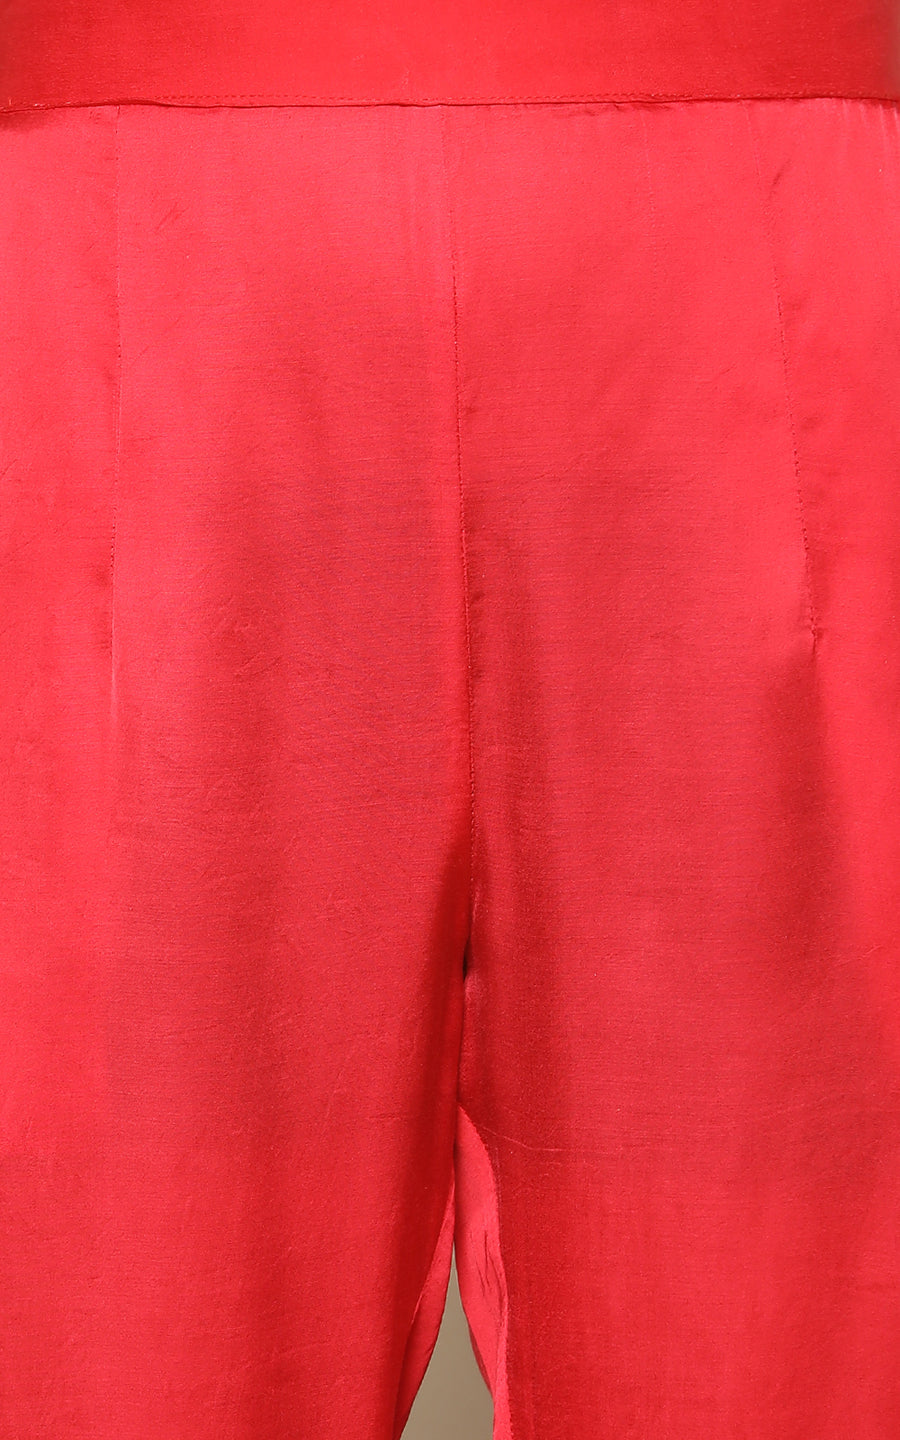 RED MODAL SILK KURTHA WITH PANTS AND PRINTED CHIFFON DUPATTA